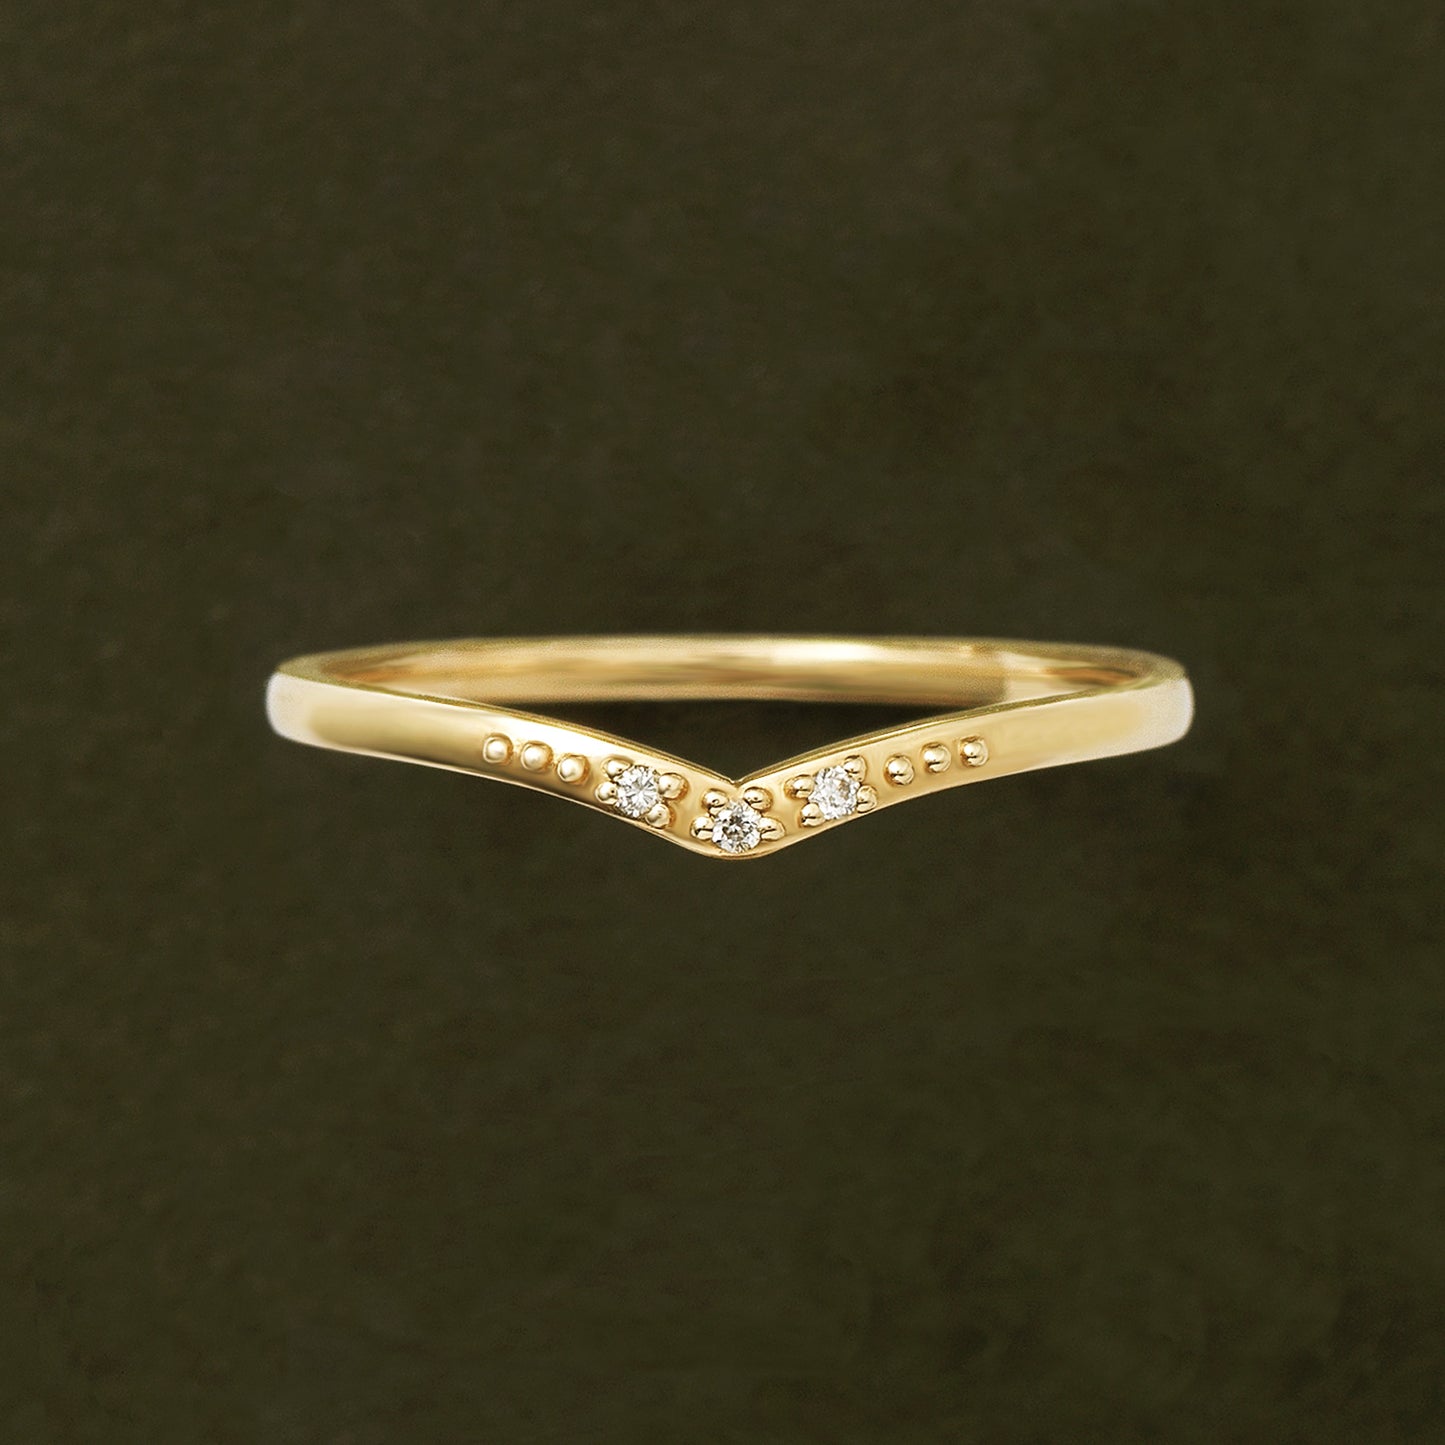 10K Yellow Gold V-Line Milgrain 3-Stone Diamond Ring - Product Image